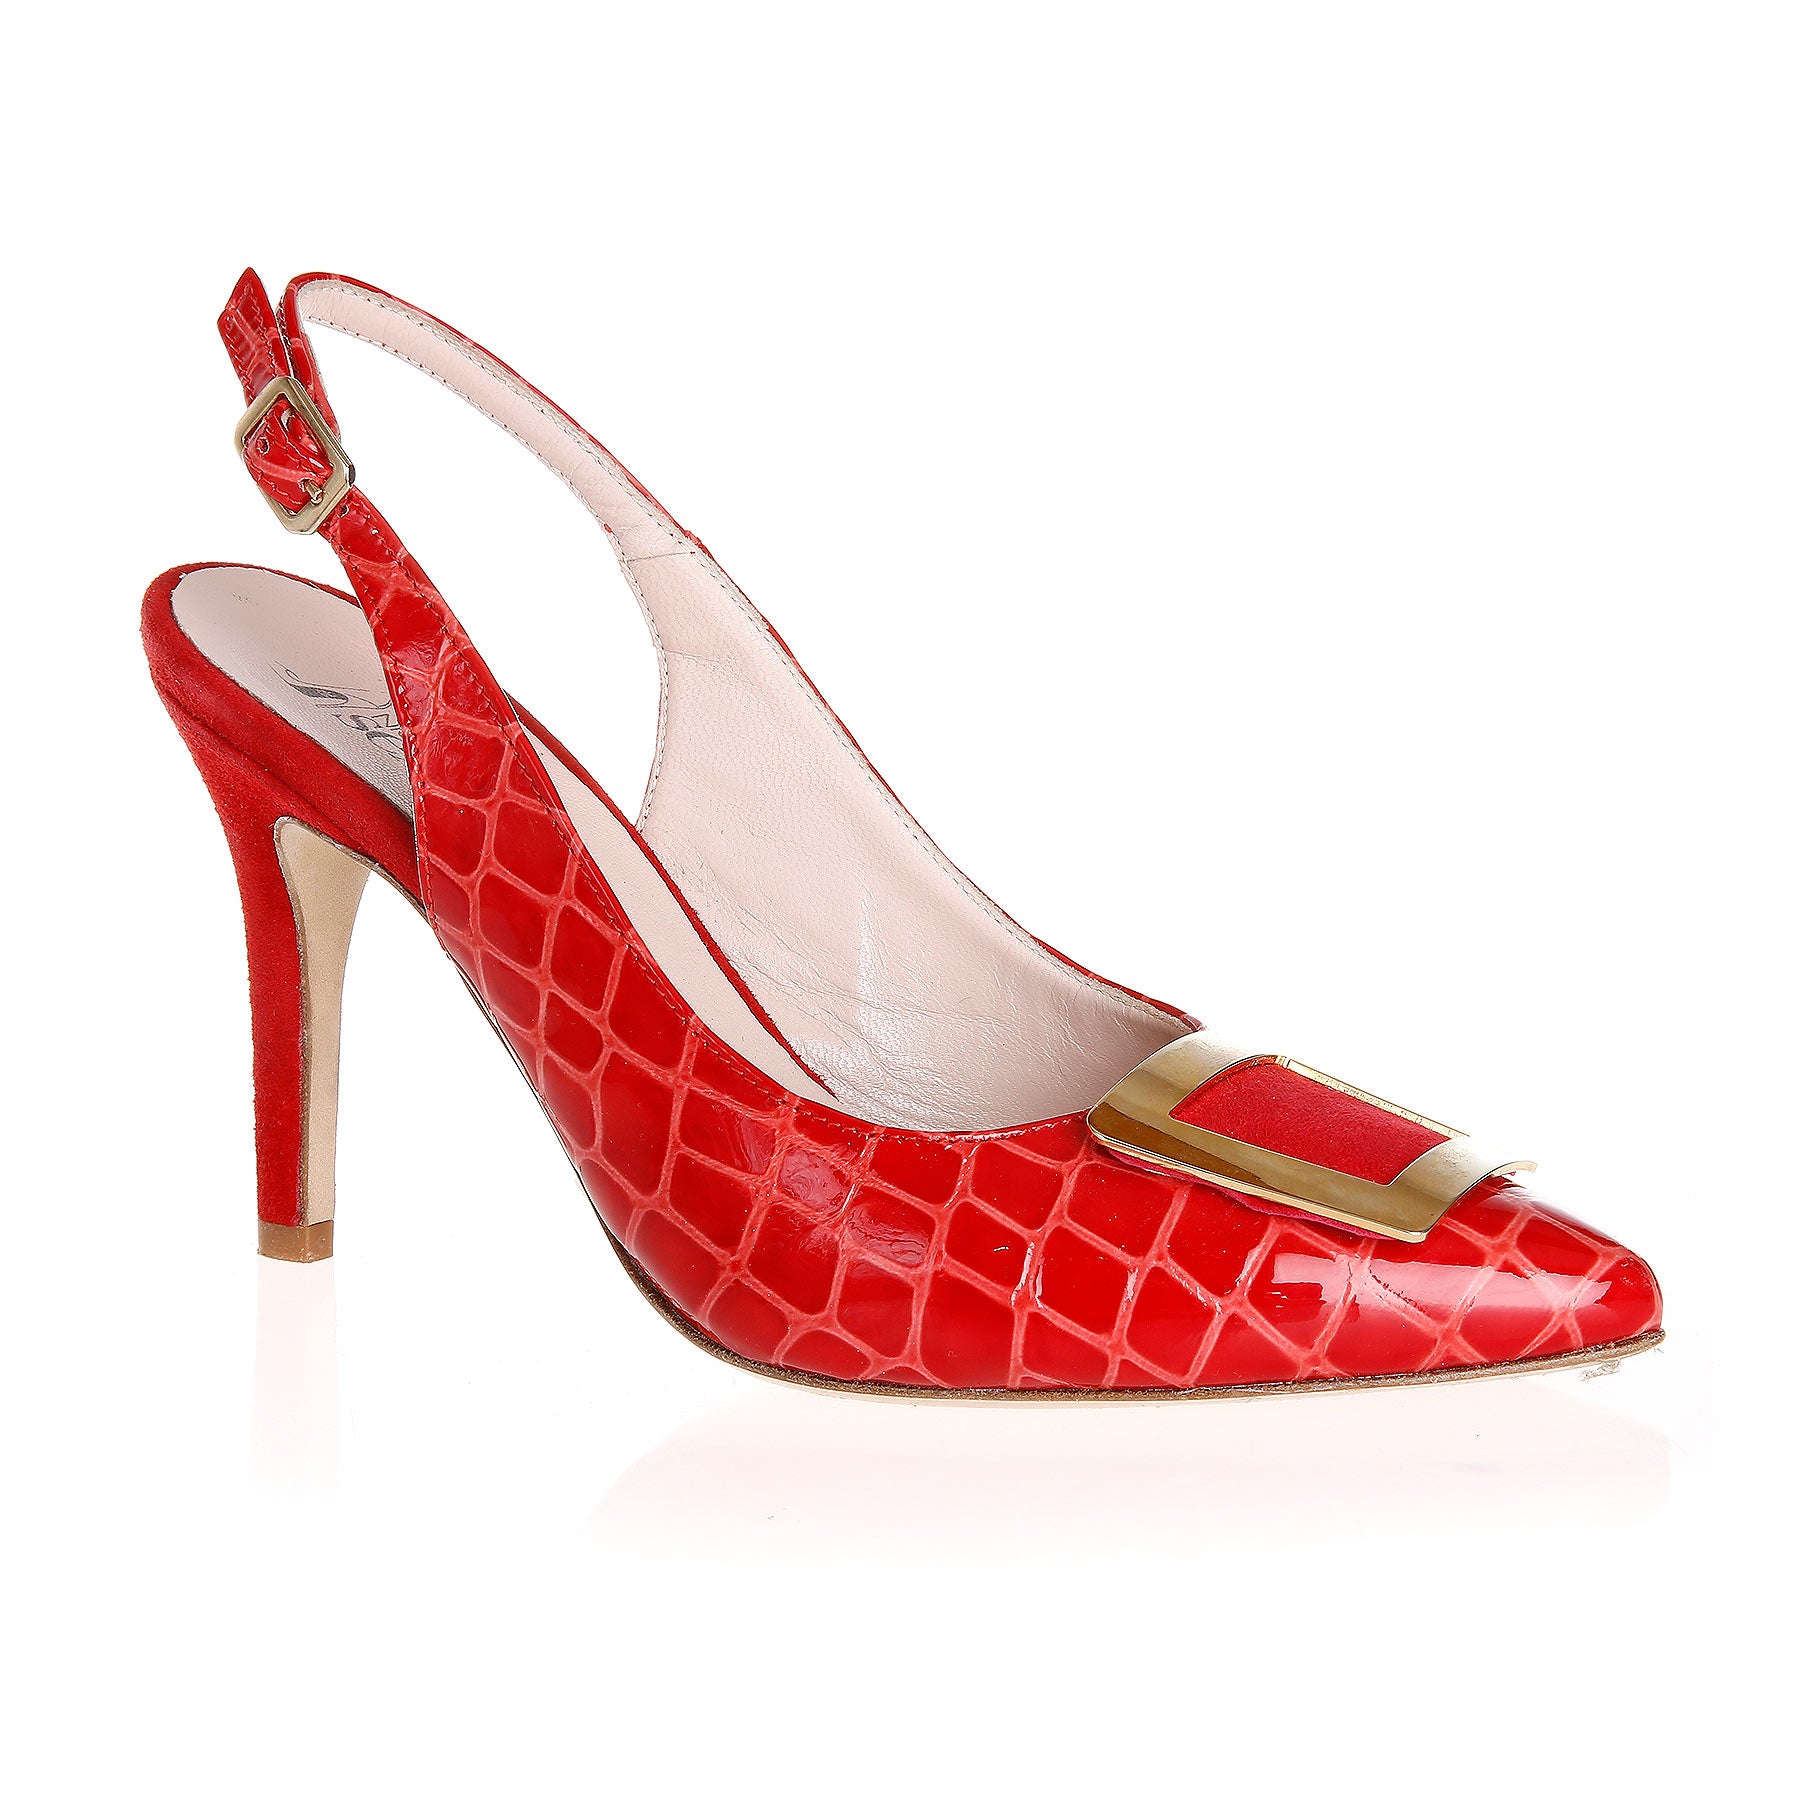 Nicola Sexton ladies high heel sling back shoe